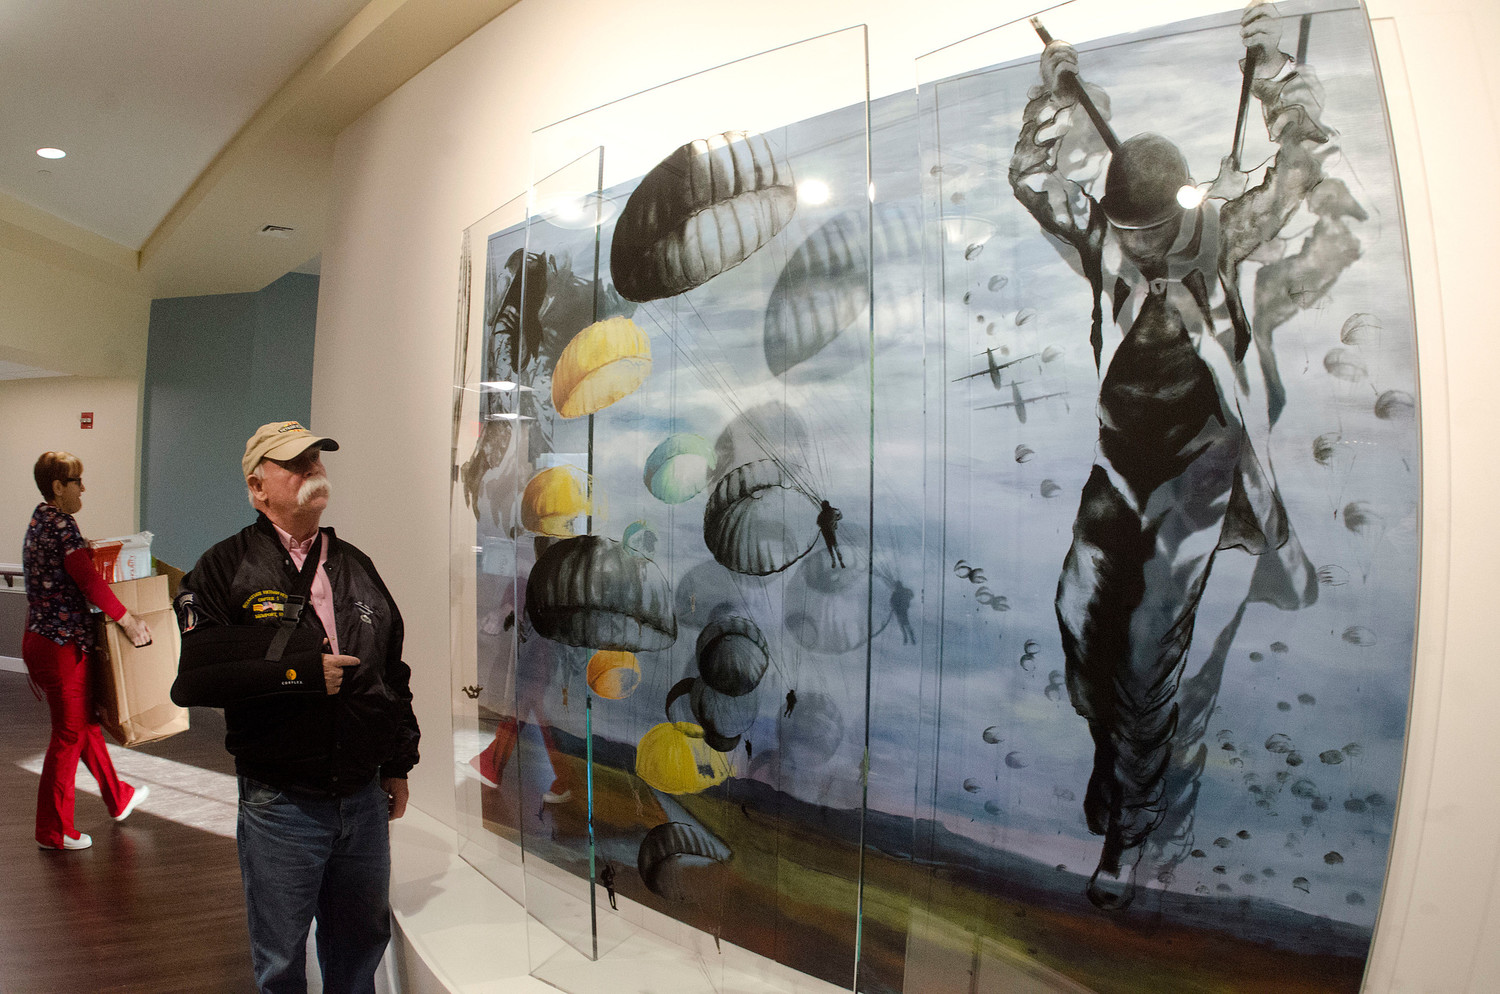 Vietnam veteran Bill McCollum takes in a painting by local artist Deborah Baronas.